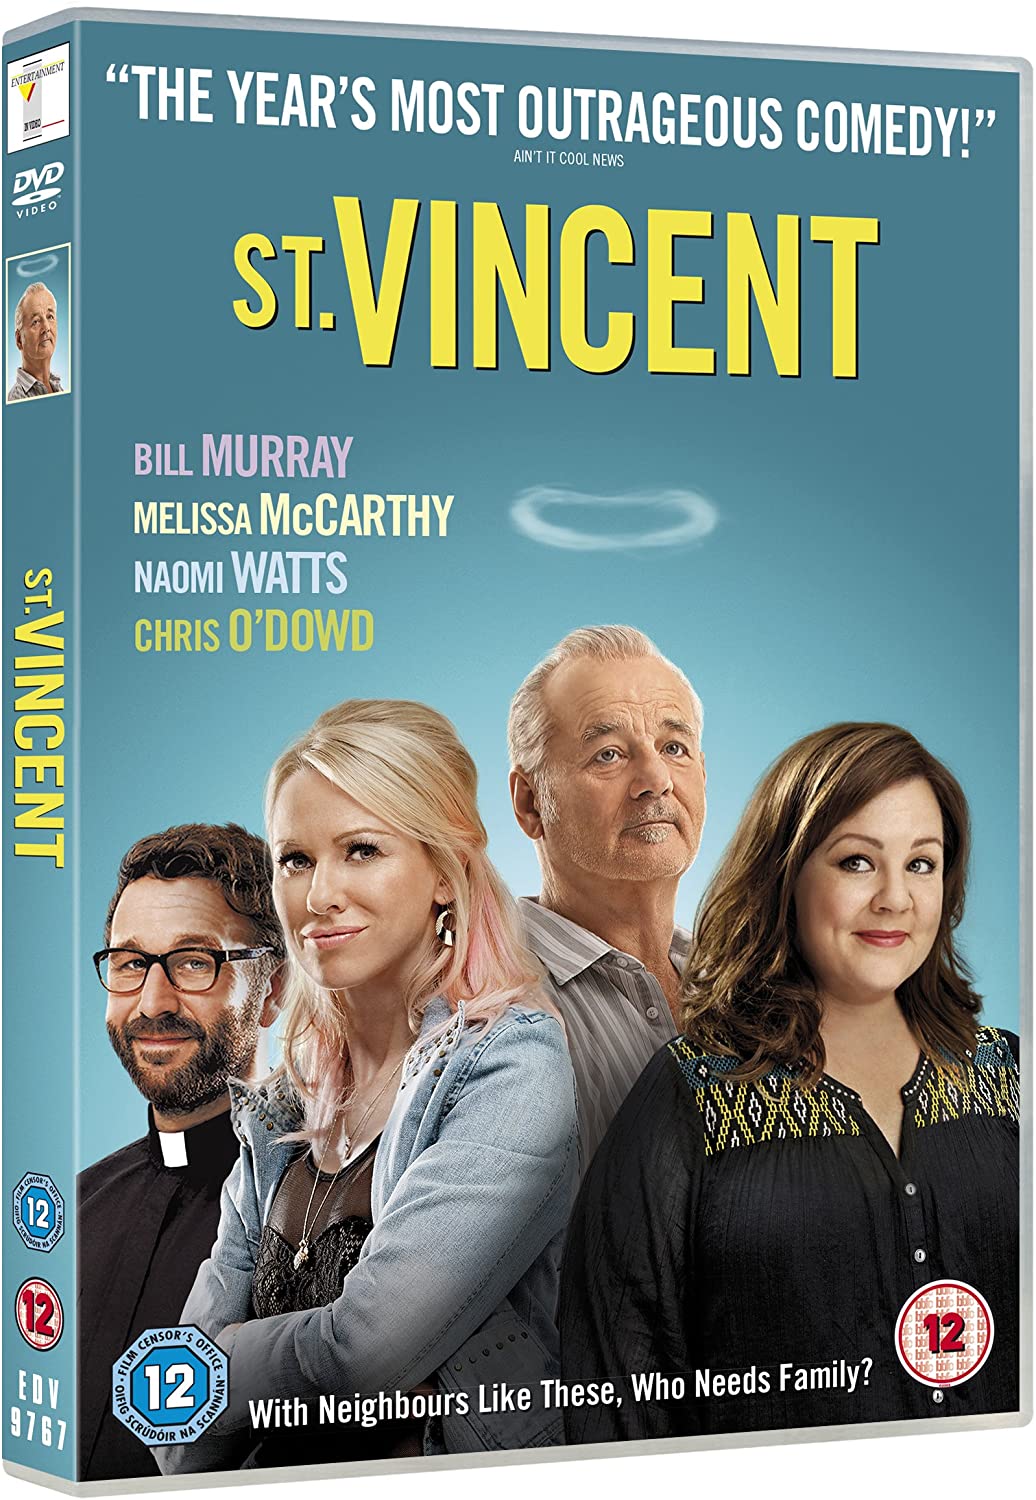 St. Vincent [2017] - Comedy [DVD]